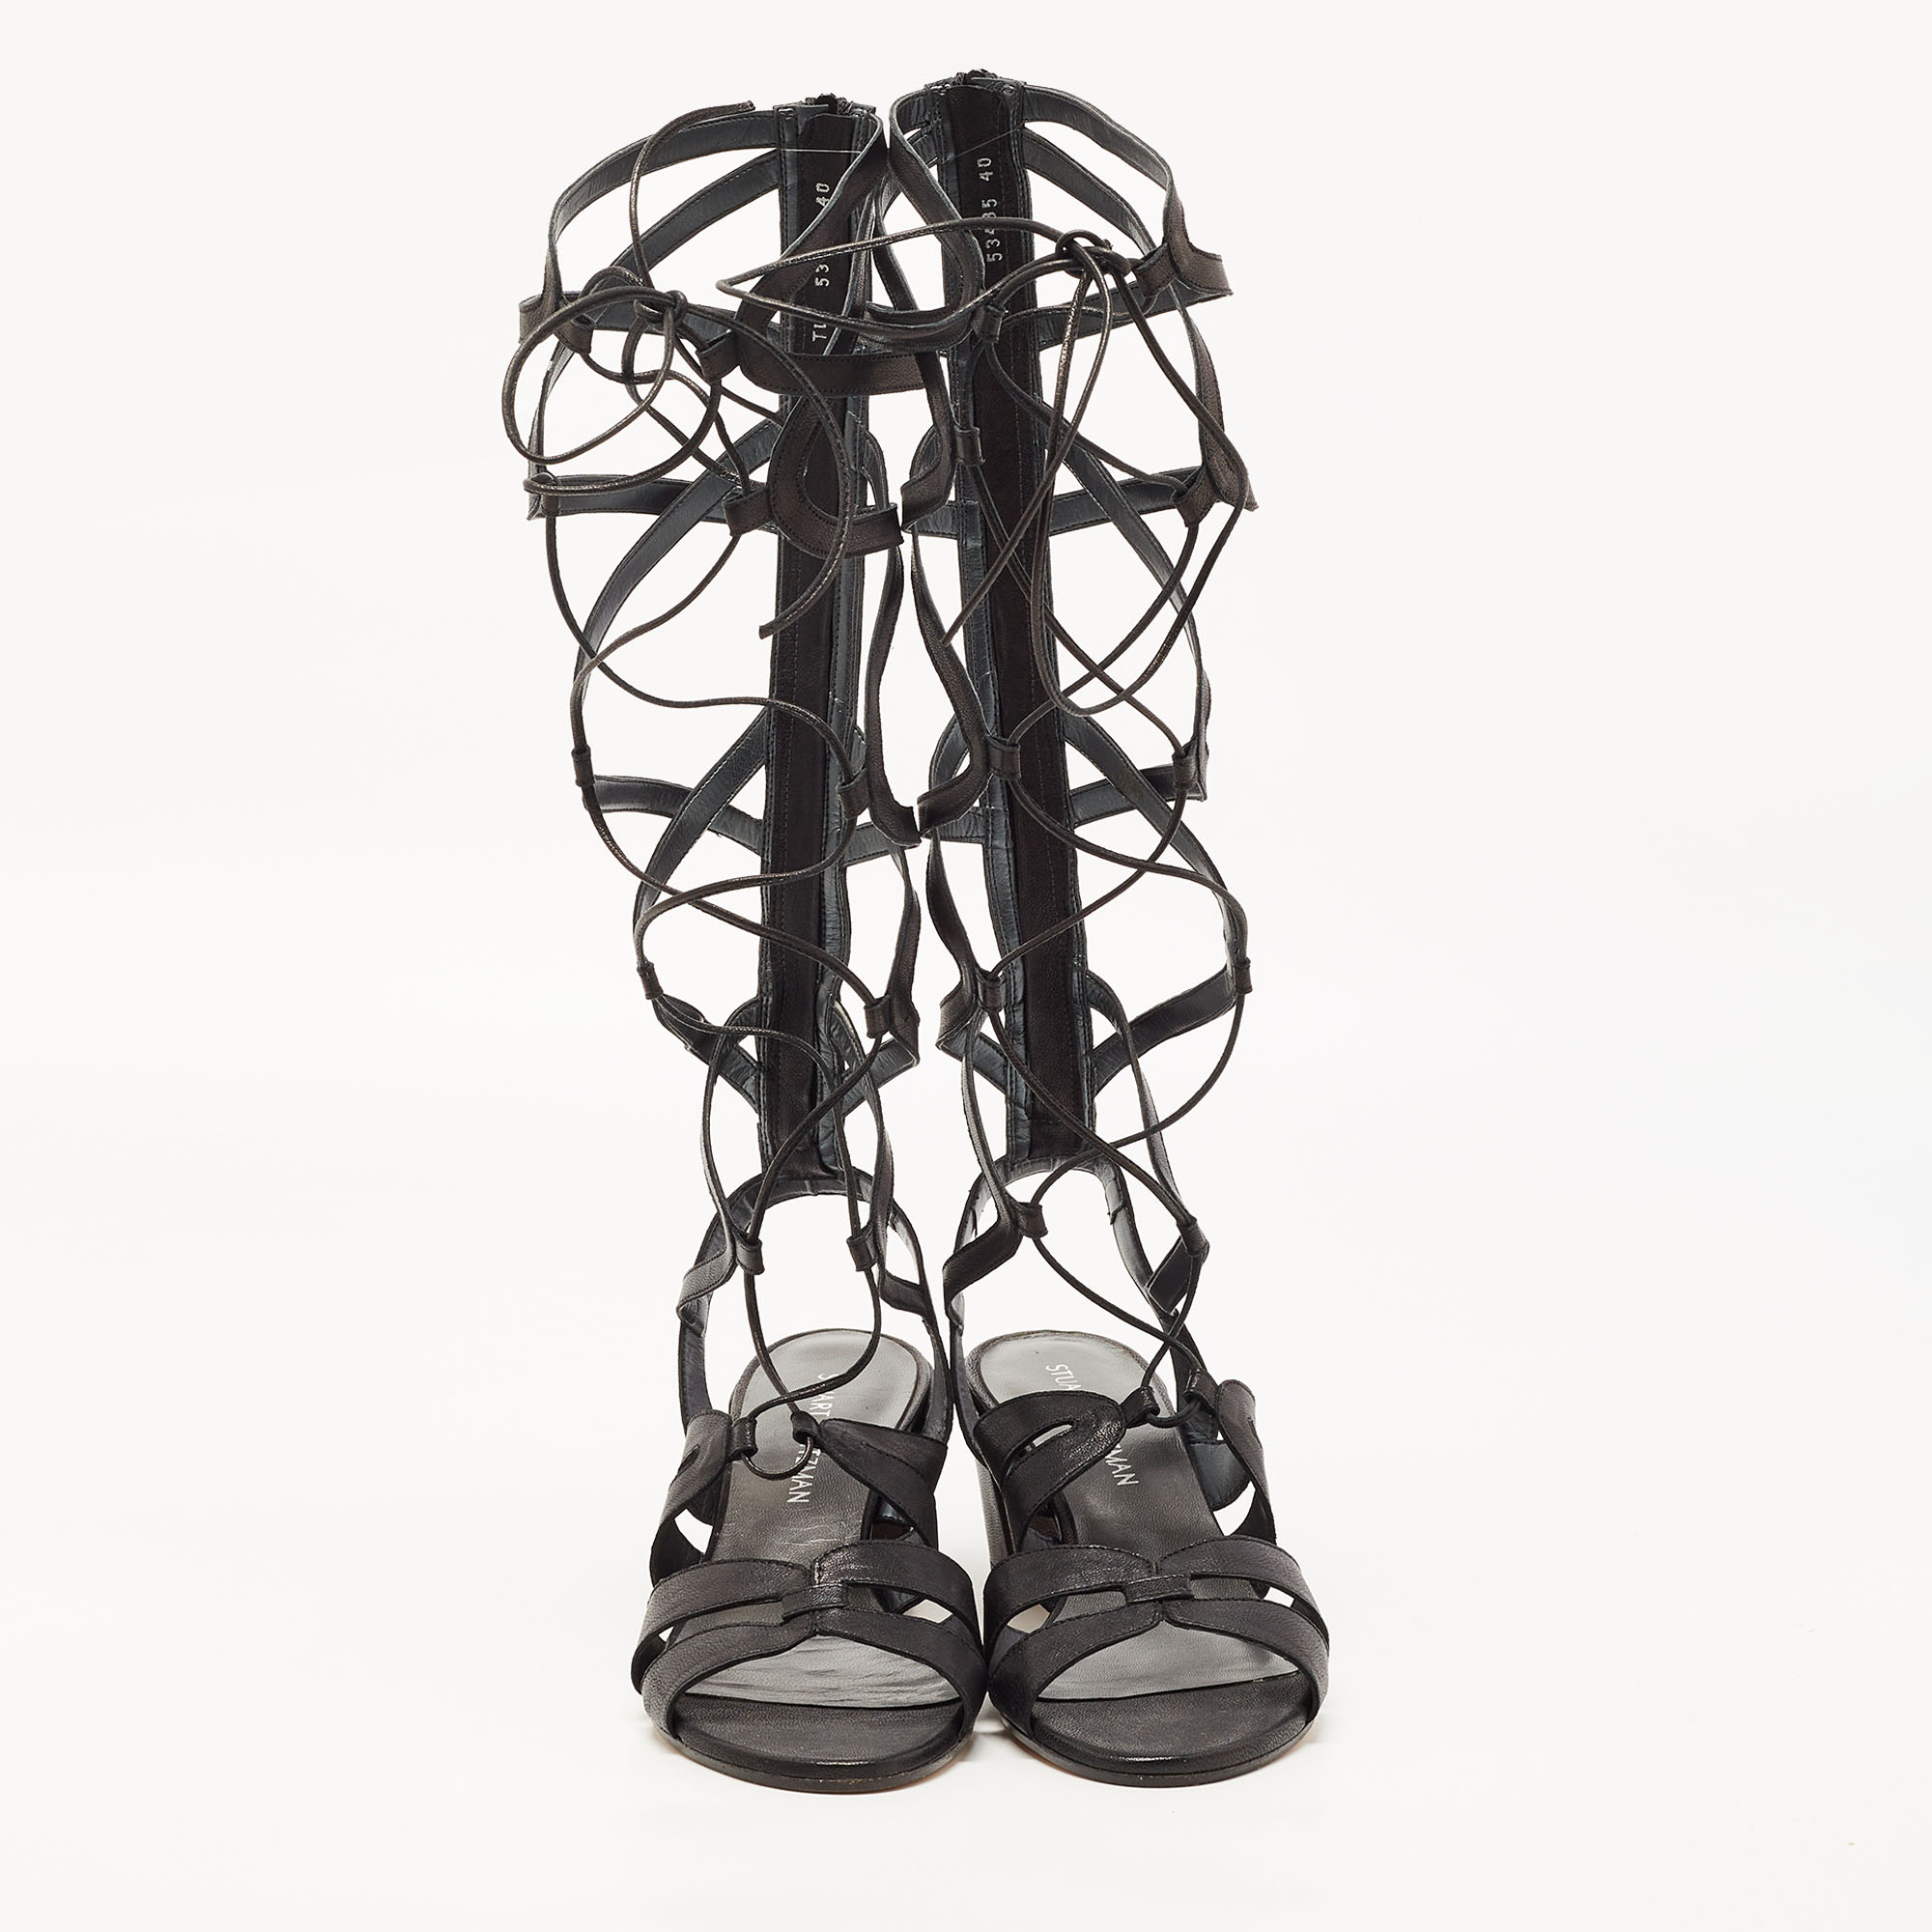 Stuart Weitzman Black Leather Gladiator Ankle Wrap Sandals Size 40